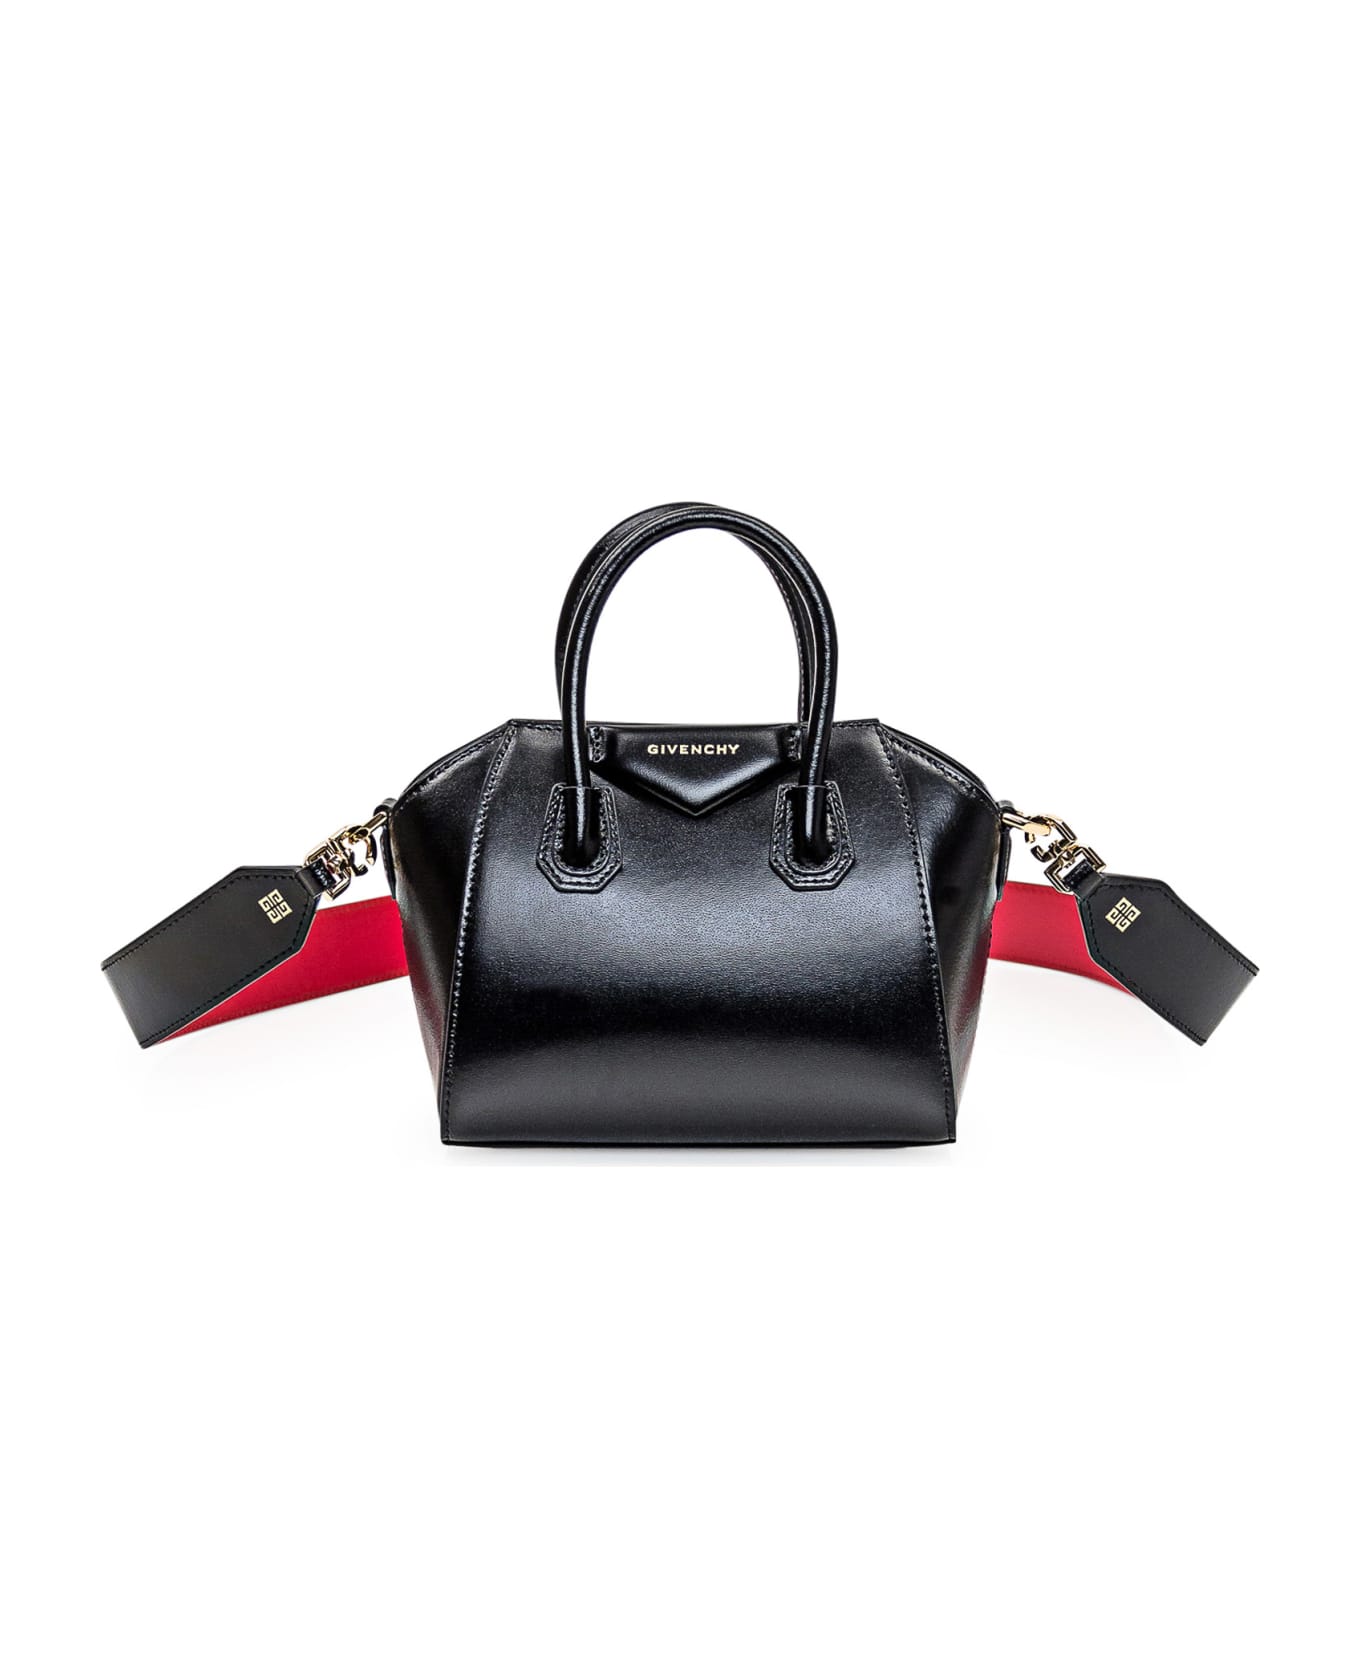 Givenchy Antigona Toy Handbag - Black トートバッグ